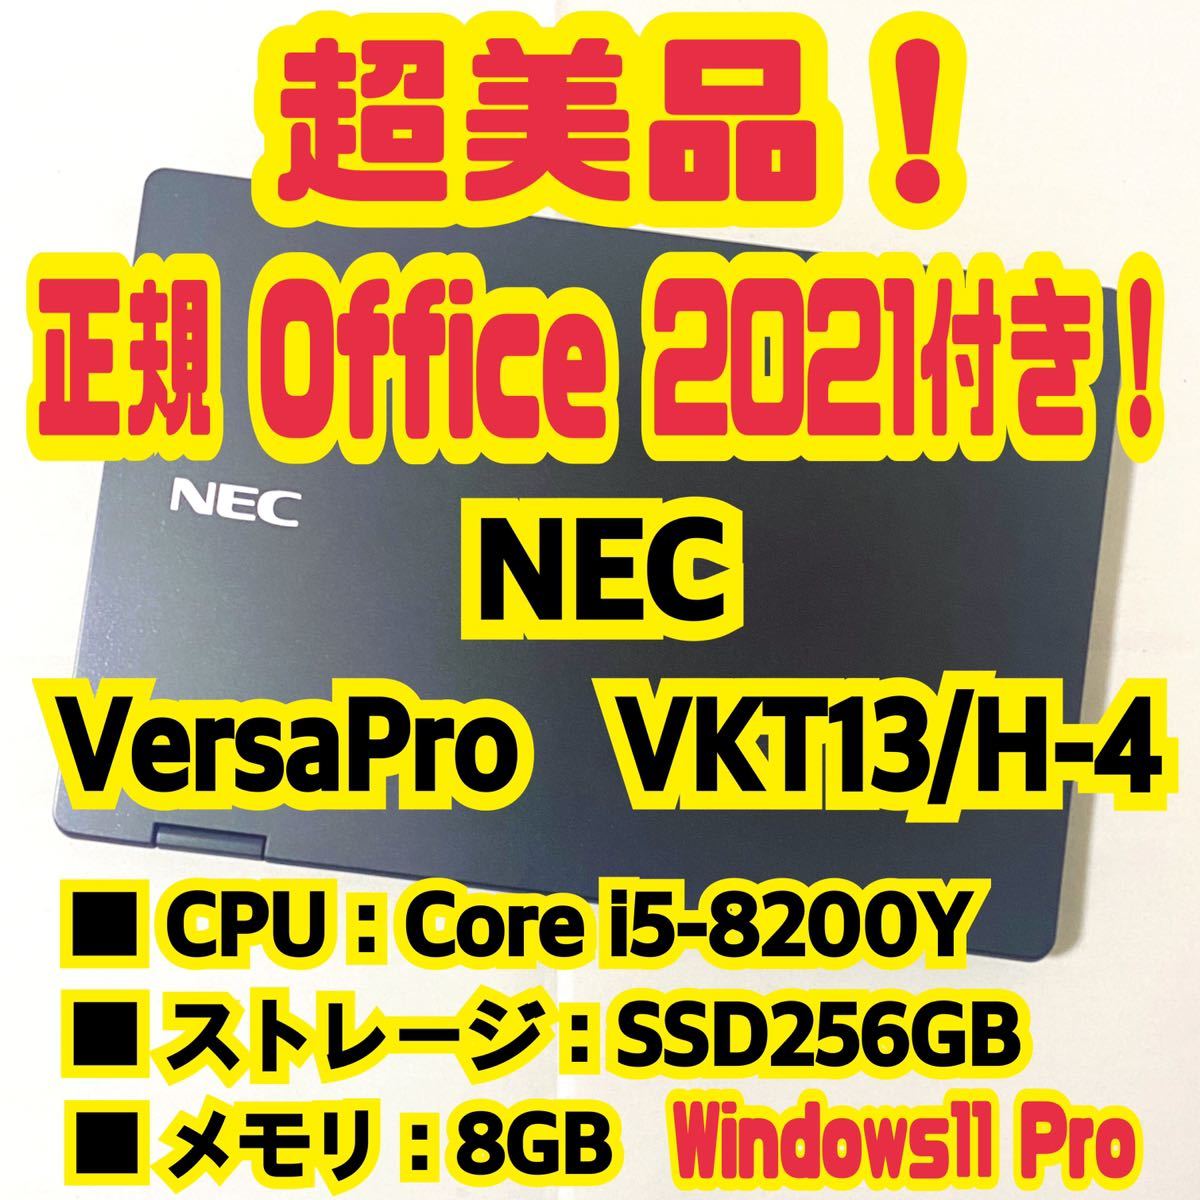 Office 2021 Pro attaching!]NEC VersaPro VKT13H-4 laptop Windows11